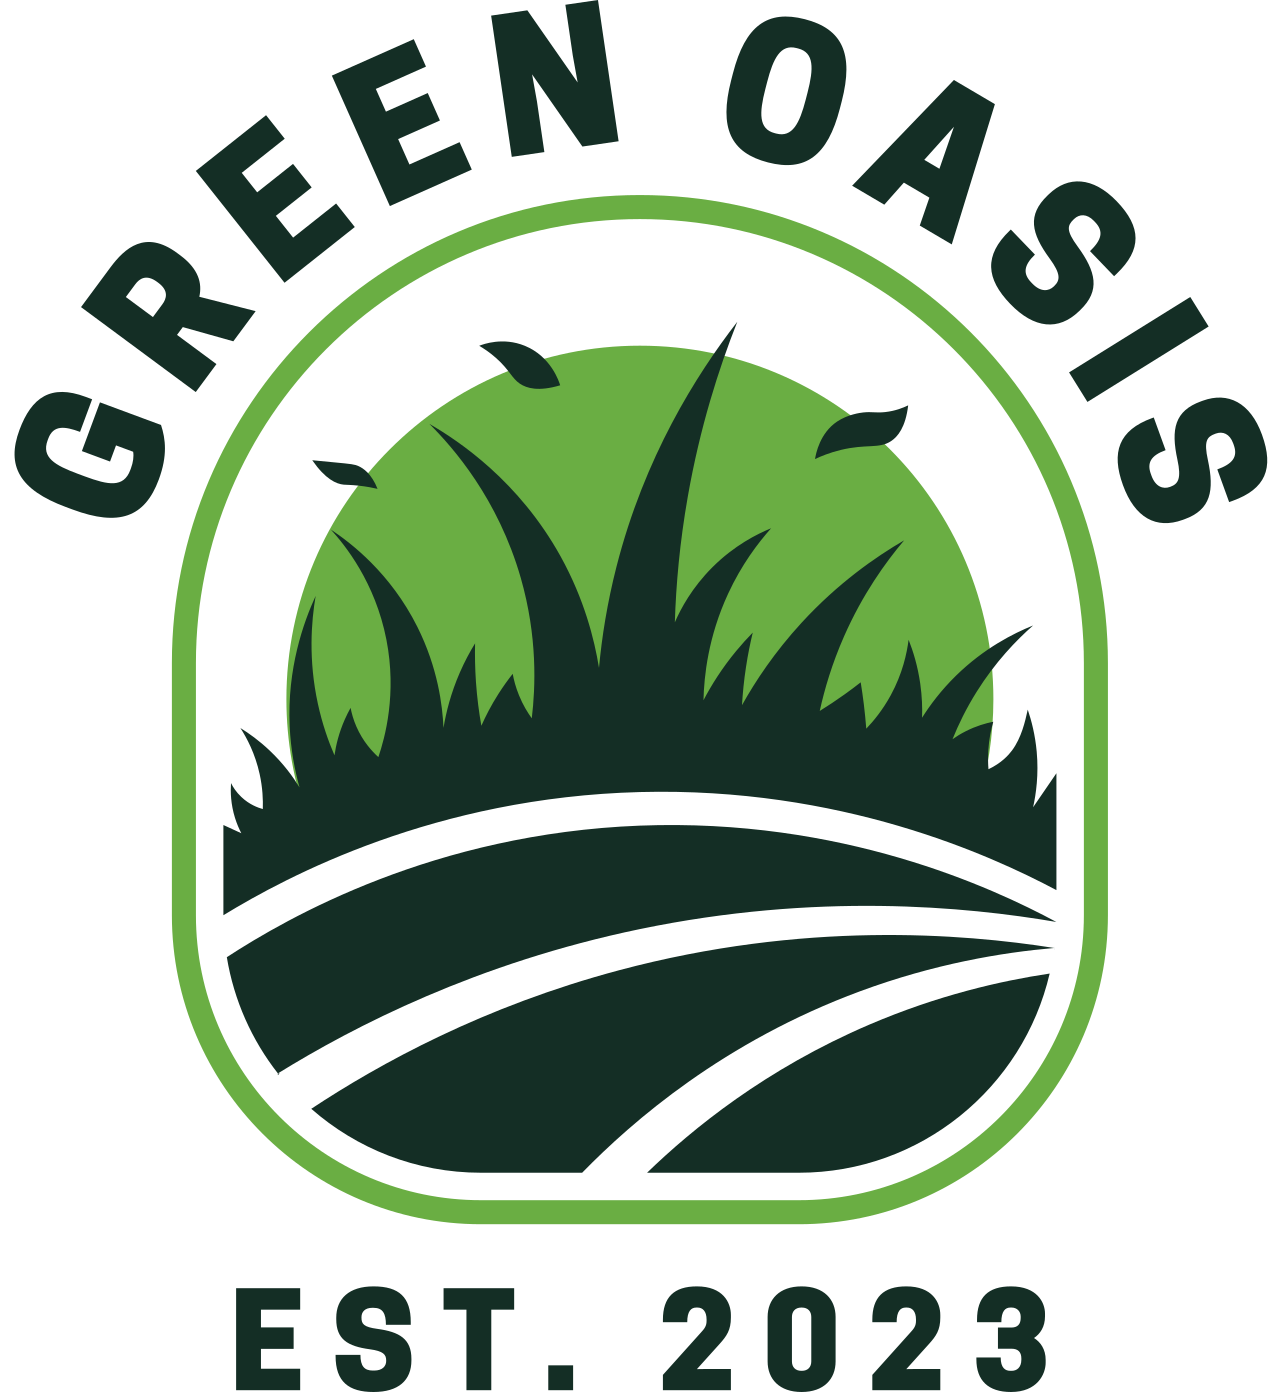 Green Oasis's logo